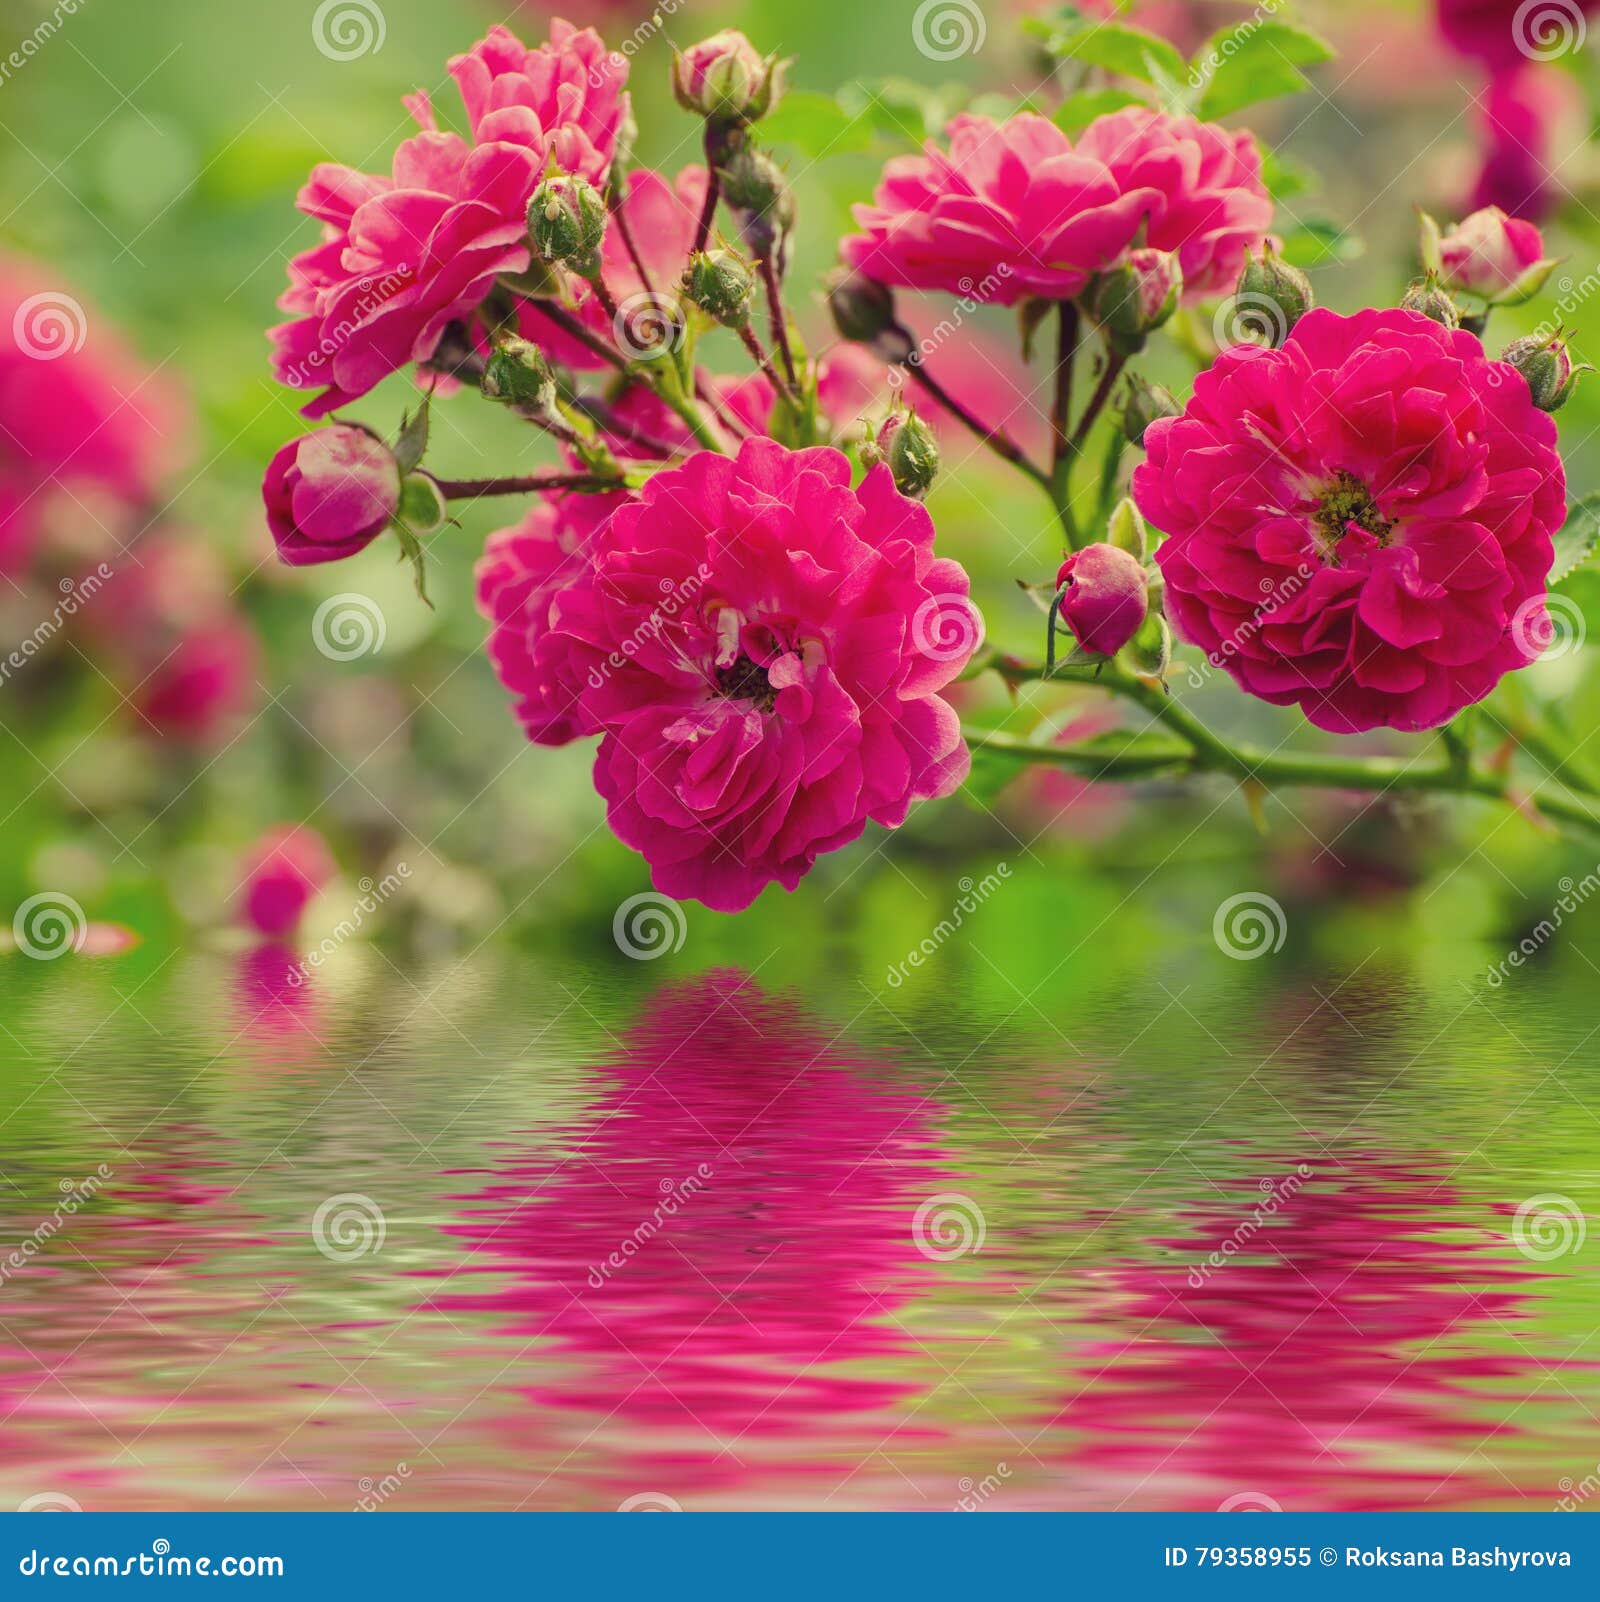 Red roses garden stock image. Image of botanical, beautiful - 79358955